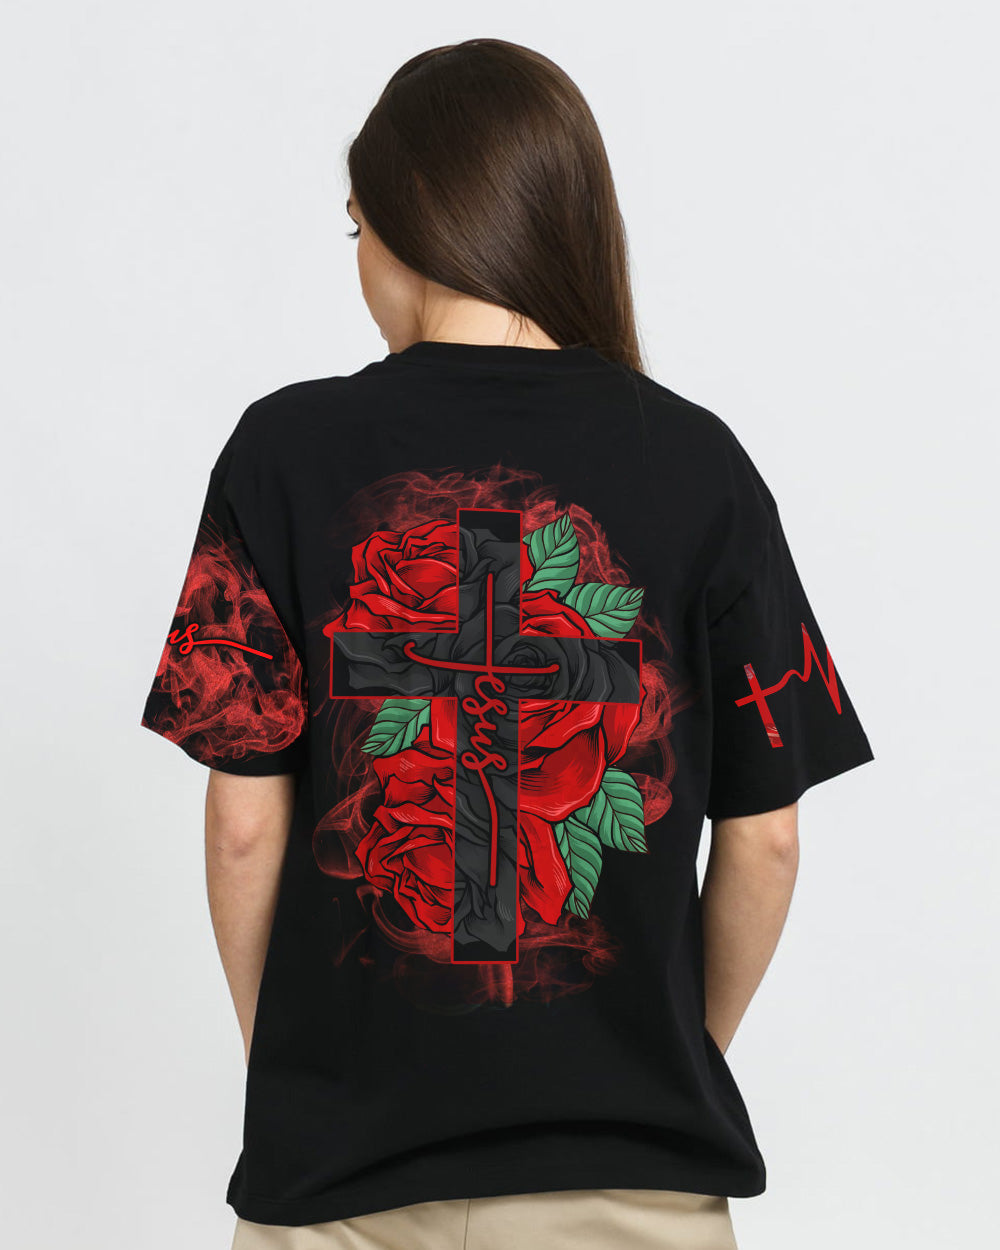 Jesus Cross Red Rose Women's Christian Tshirt